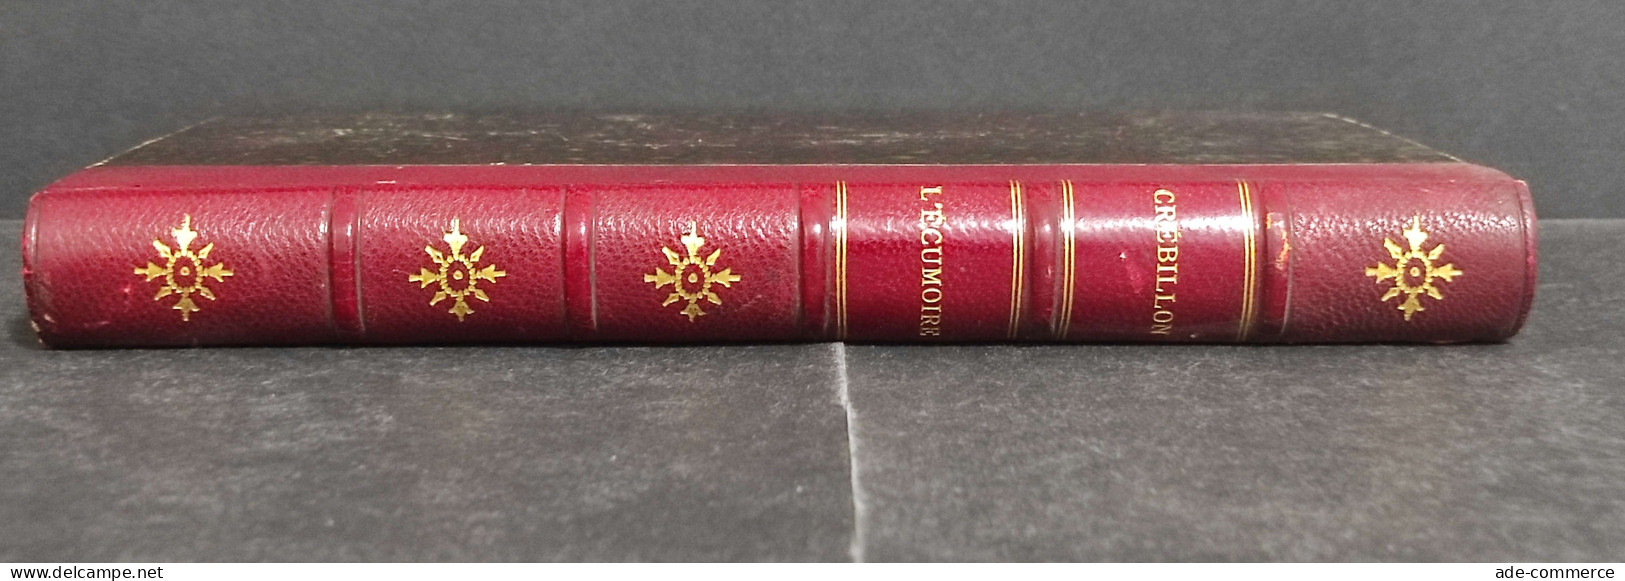 L'Ecumoire - Histoire Japonaise - Ed. Henry Kistemackers - 1884 - Libri Antichi